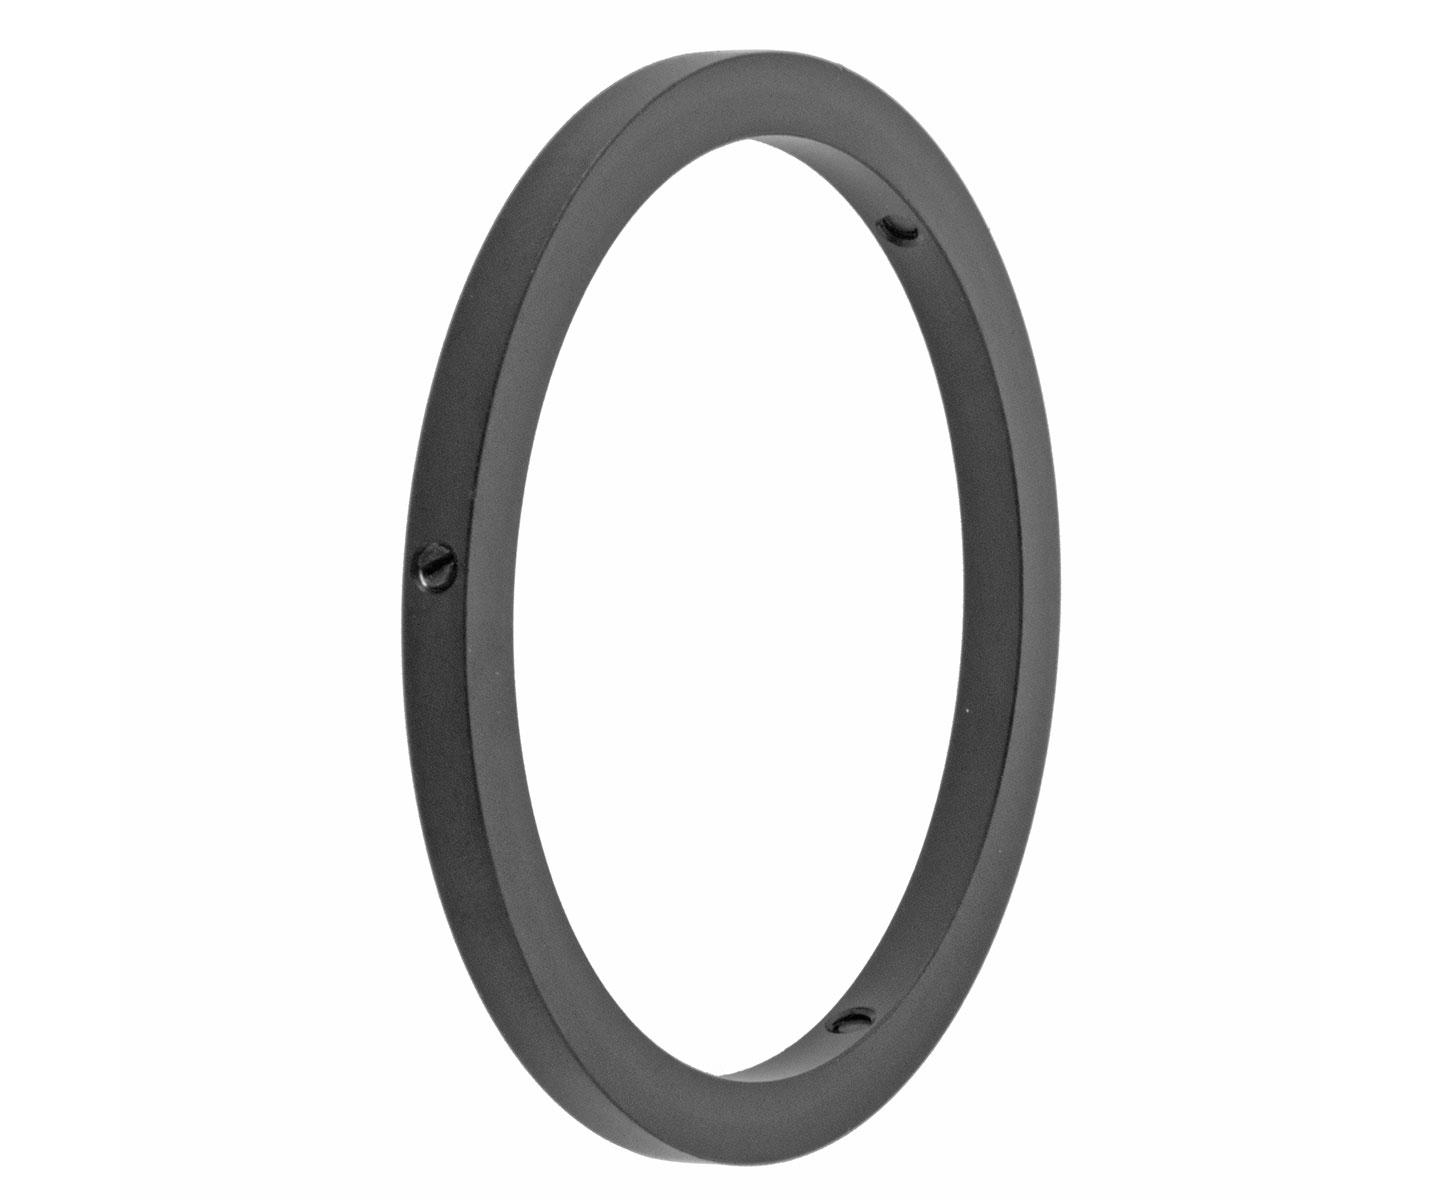    TS-Optics 2" parfocalizing ring / CCD locking ring - for 2" barrels  [EN]  